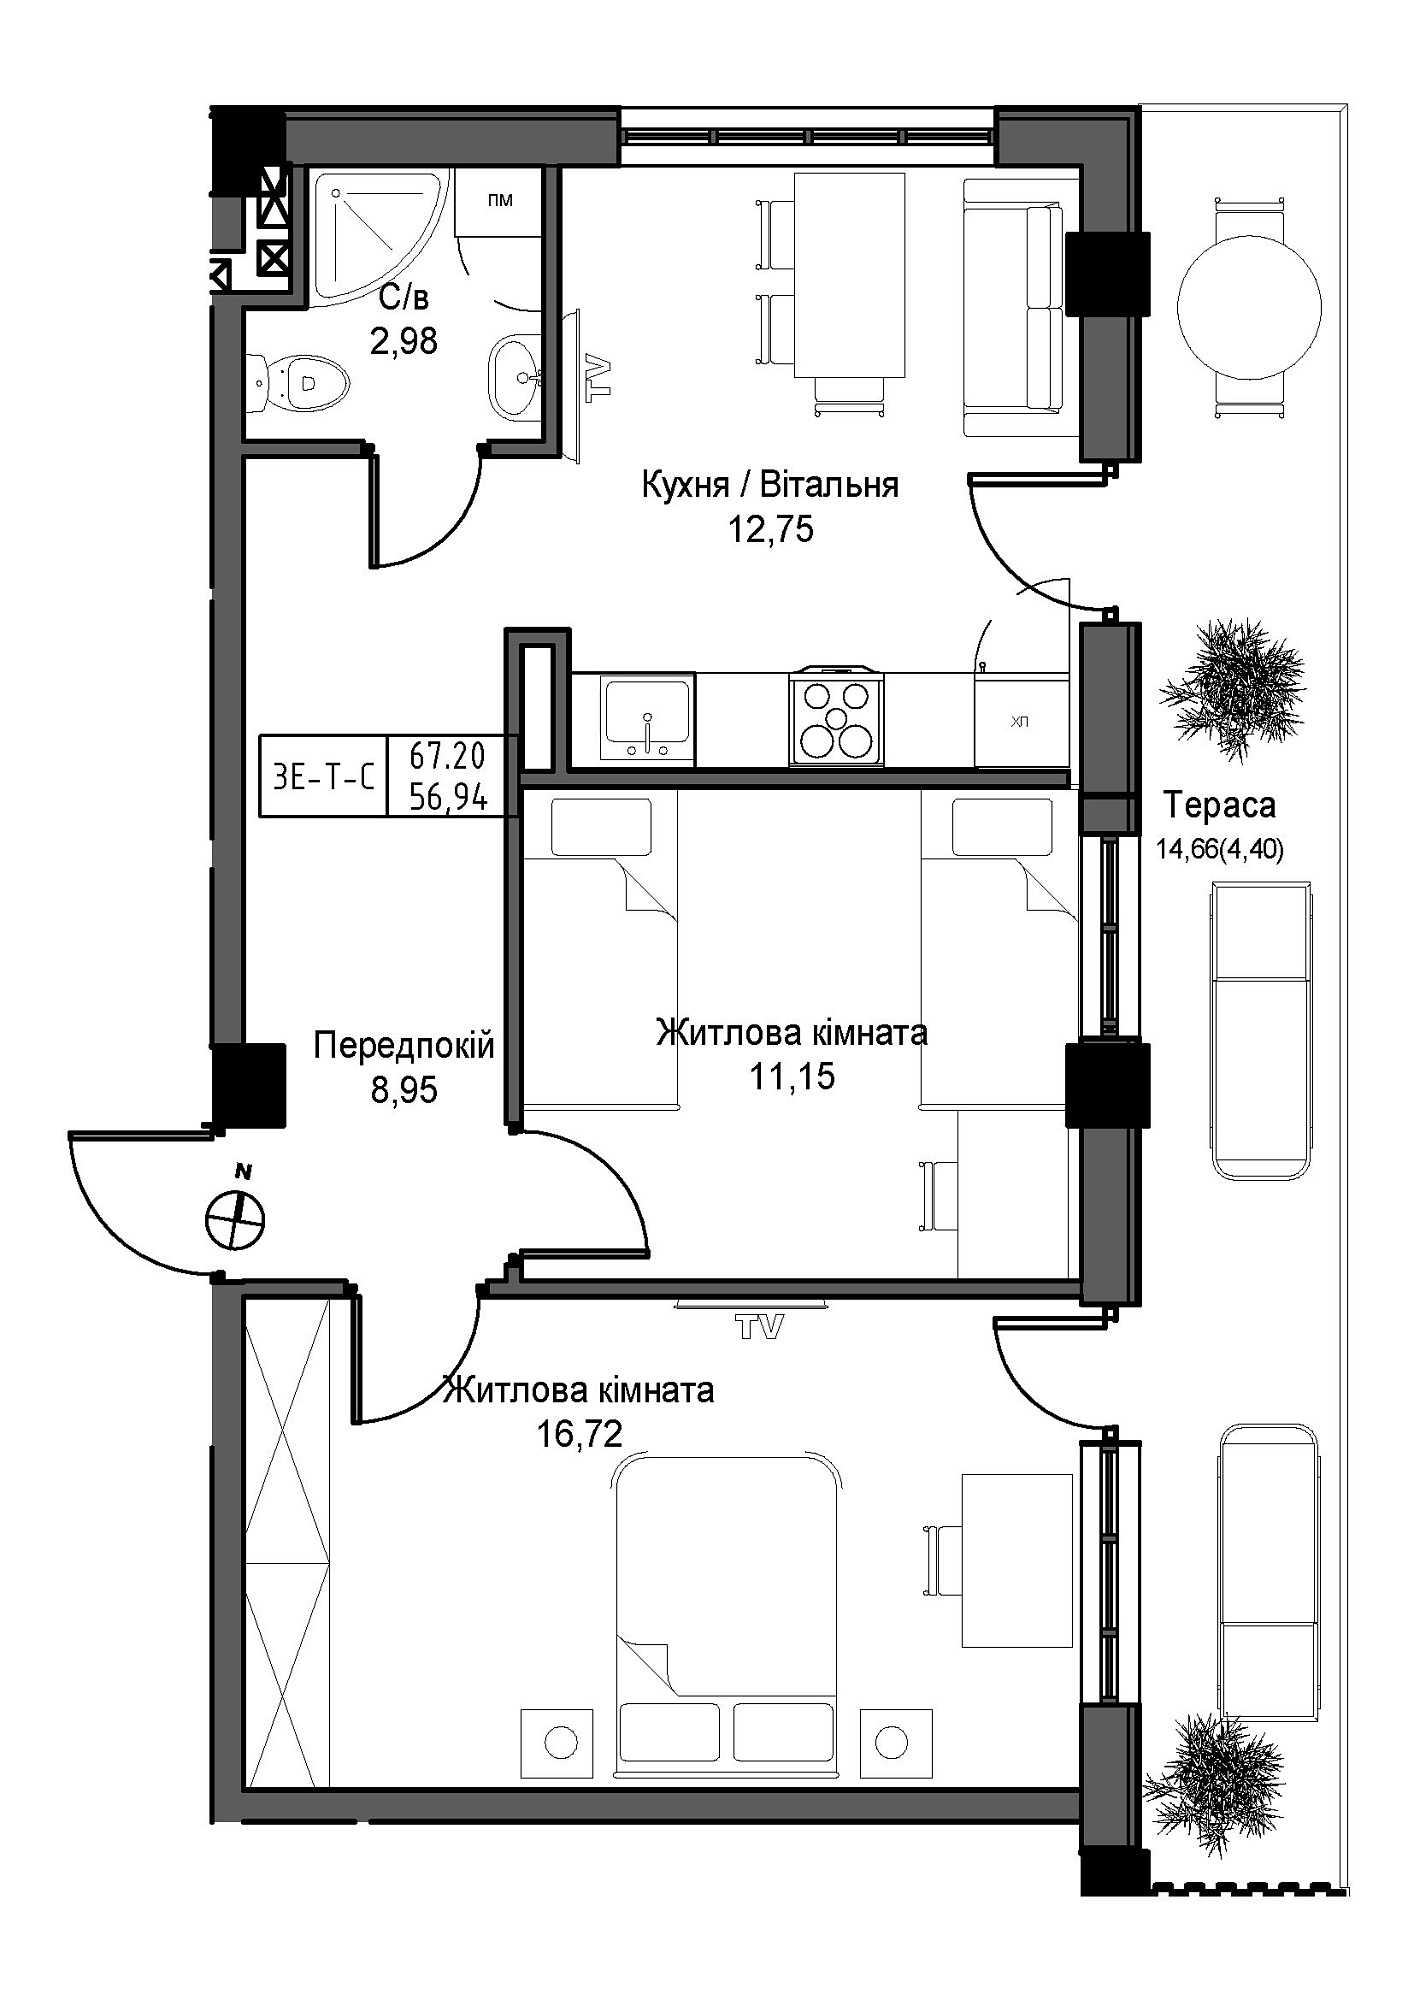 Planning 2-rm flats area 56.94m2, UM-007-11/0004.